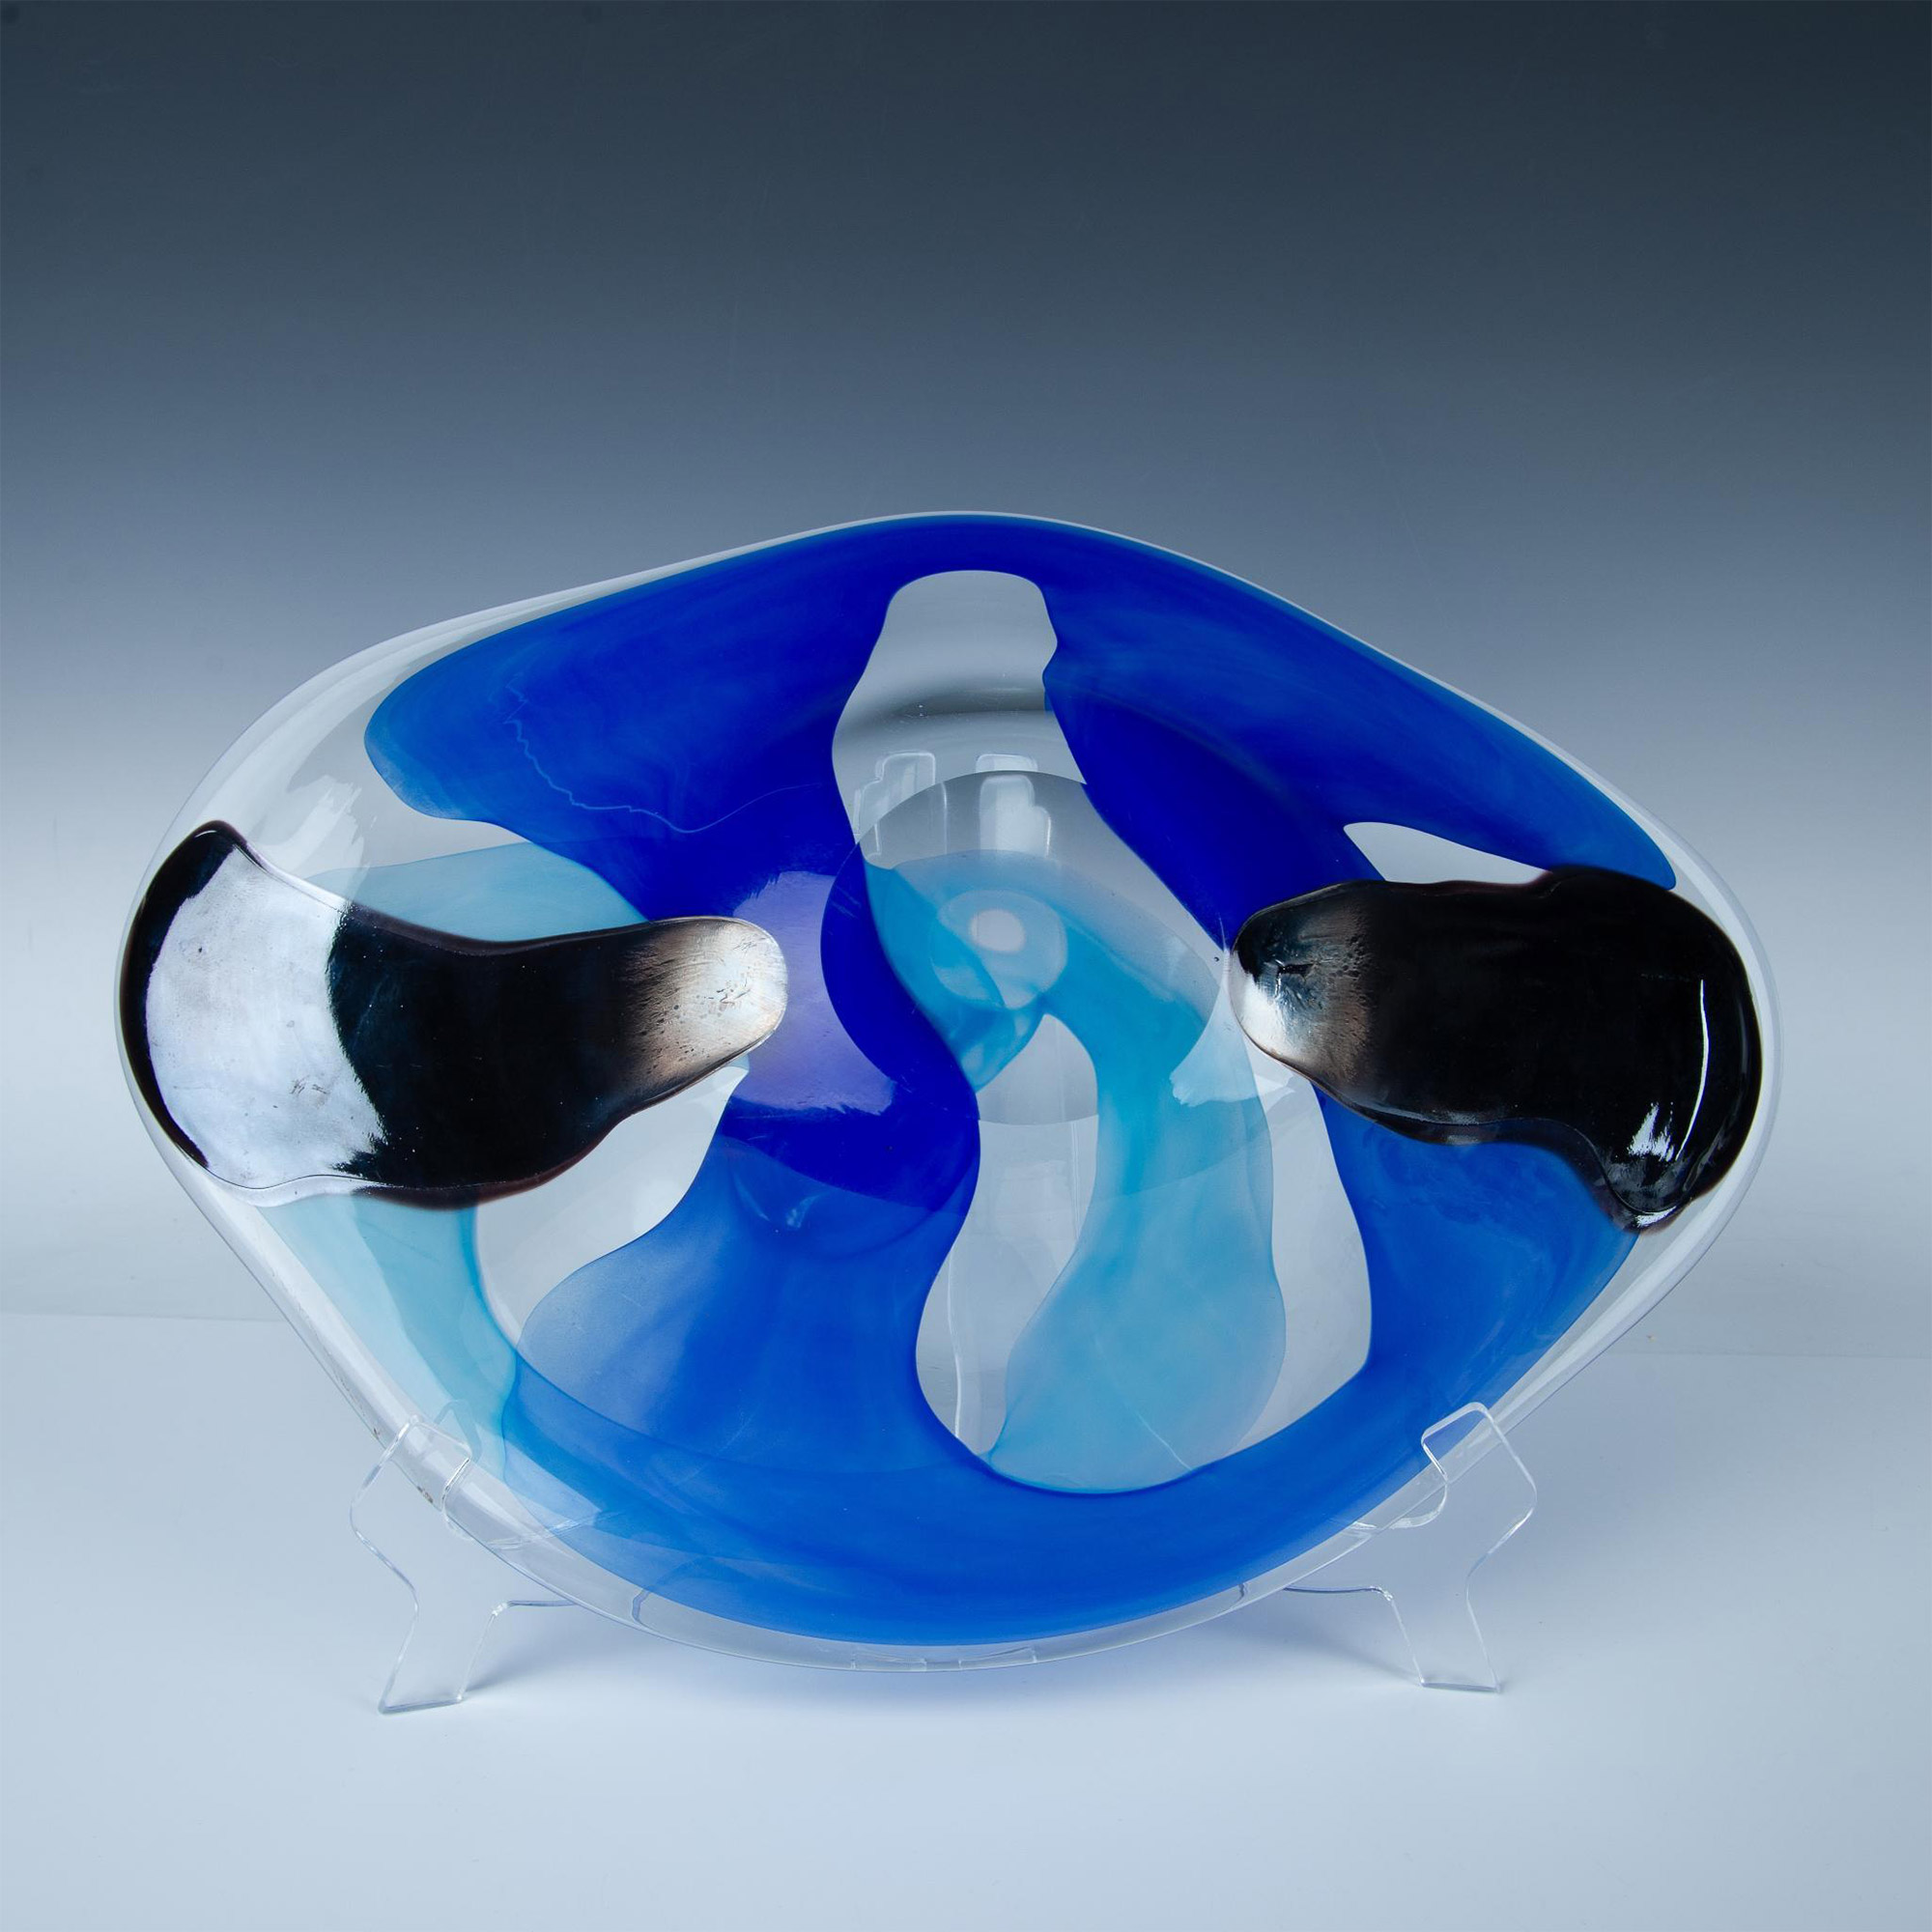 Sasaki Glass Swirl Centerpiece Bowl - Image 3 of 4